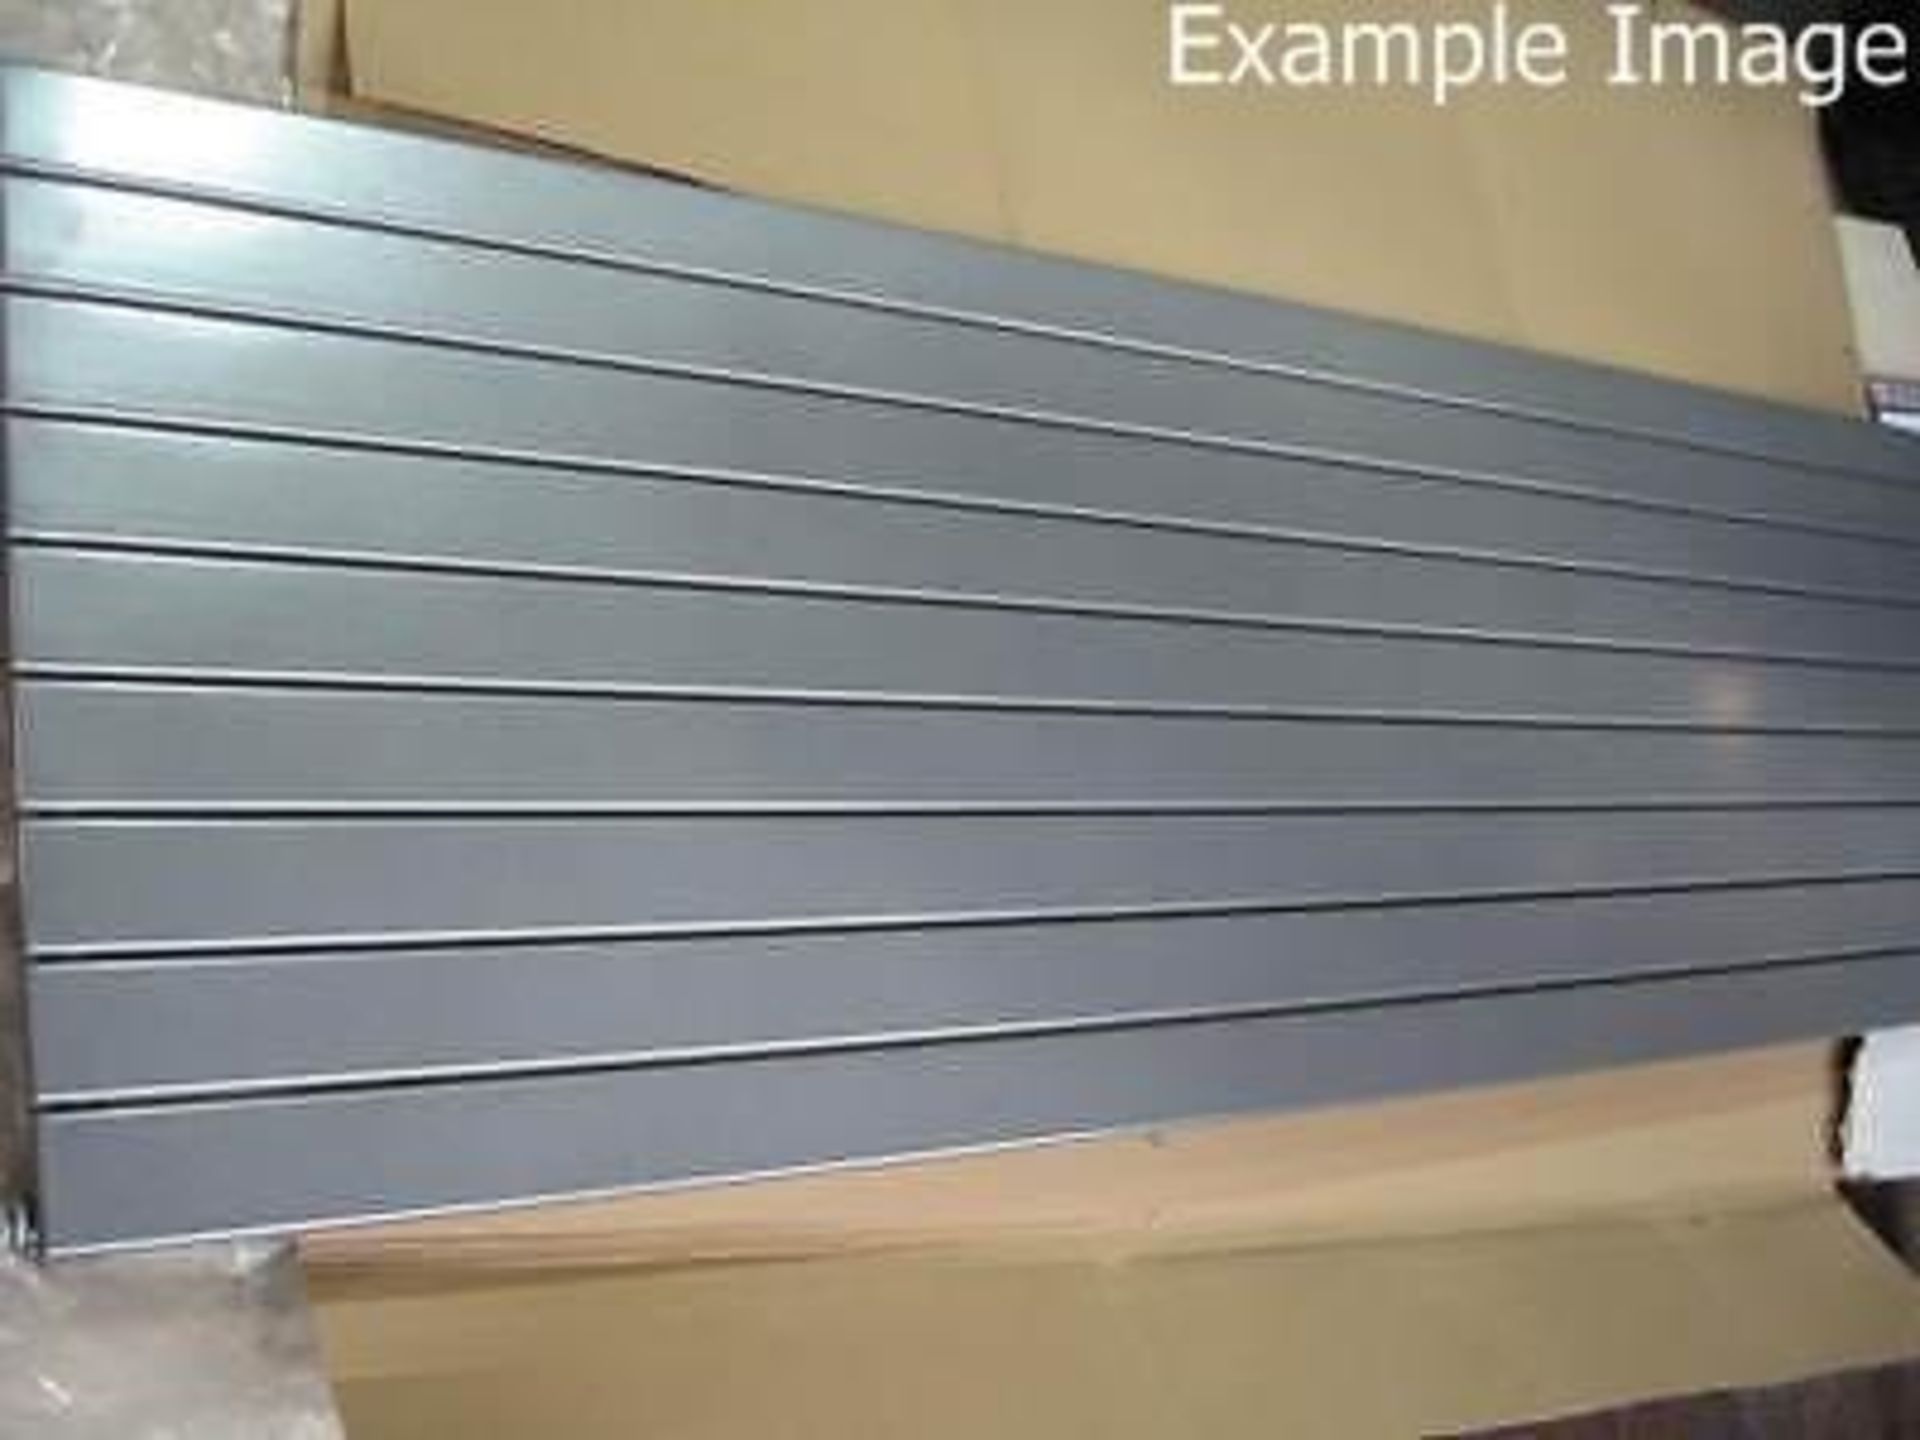 1 x Quinn Slieve Designer Single Panel Radiator in Silver - Contemporary Design - Will Enhance any I - Image 4 of 4